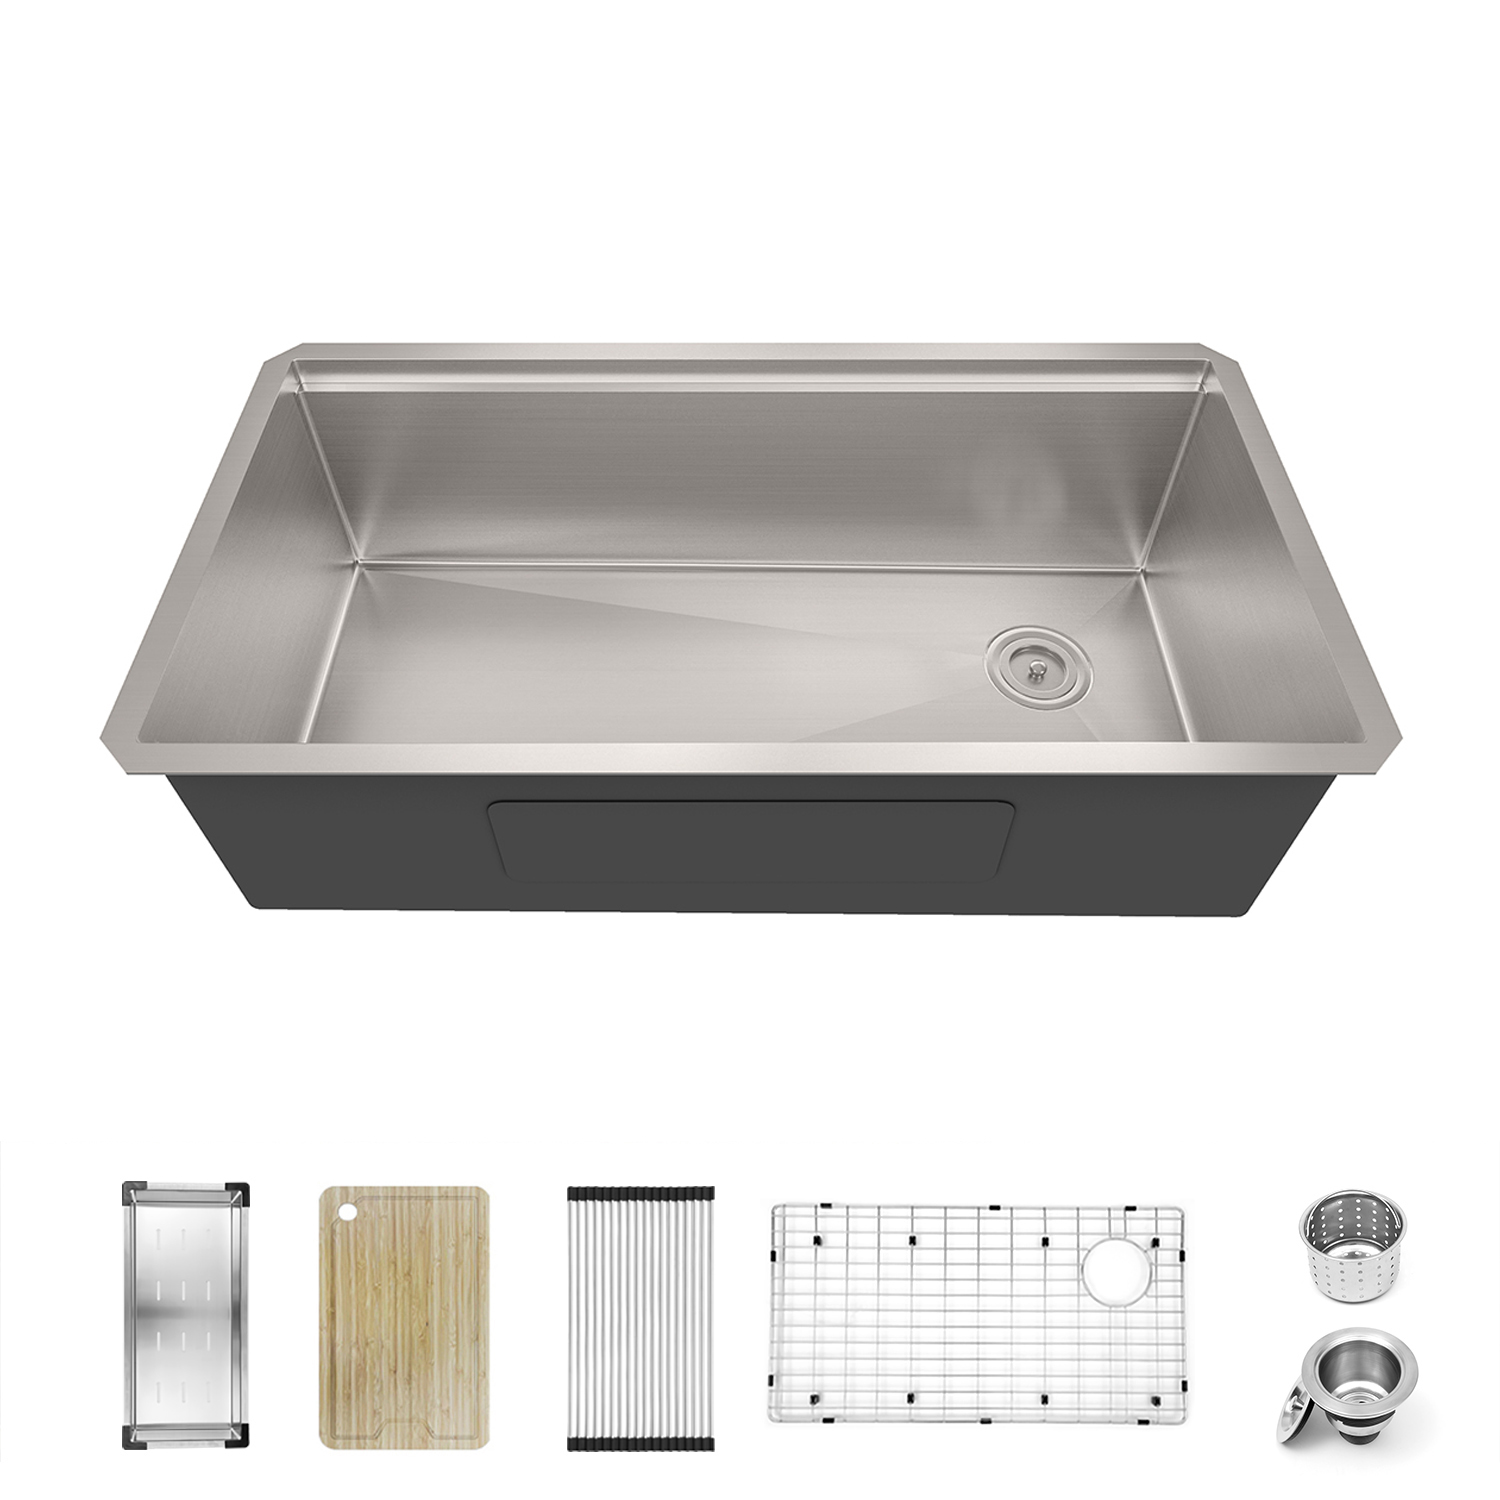 KSS0001S-OL 32”16 Gauge Undermount Single Bowl Workstation 304 Stainless Steel Kitchen Sink With Accessories